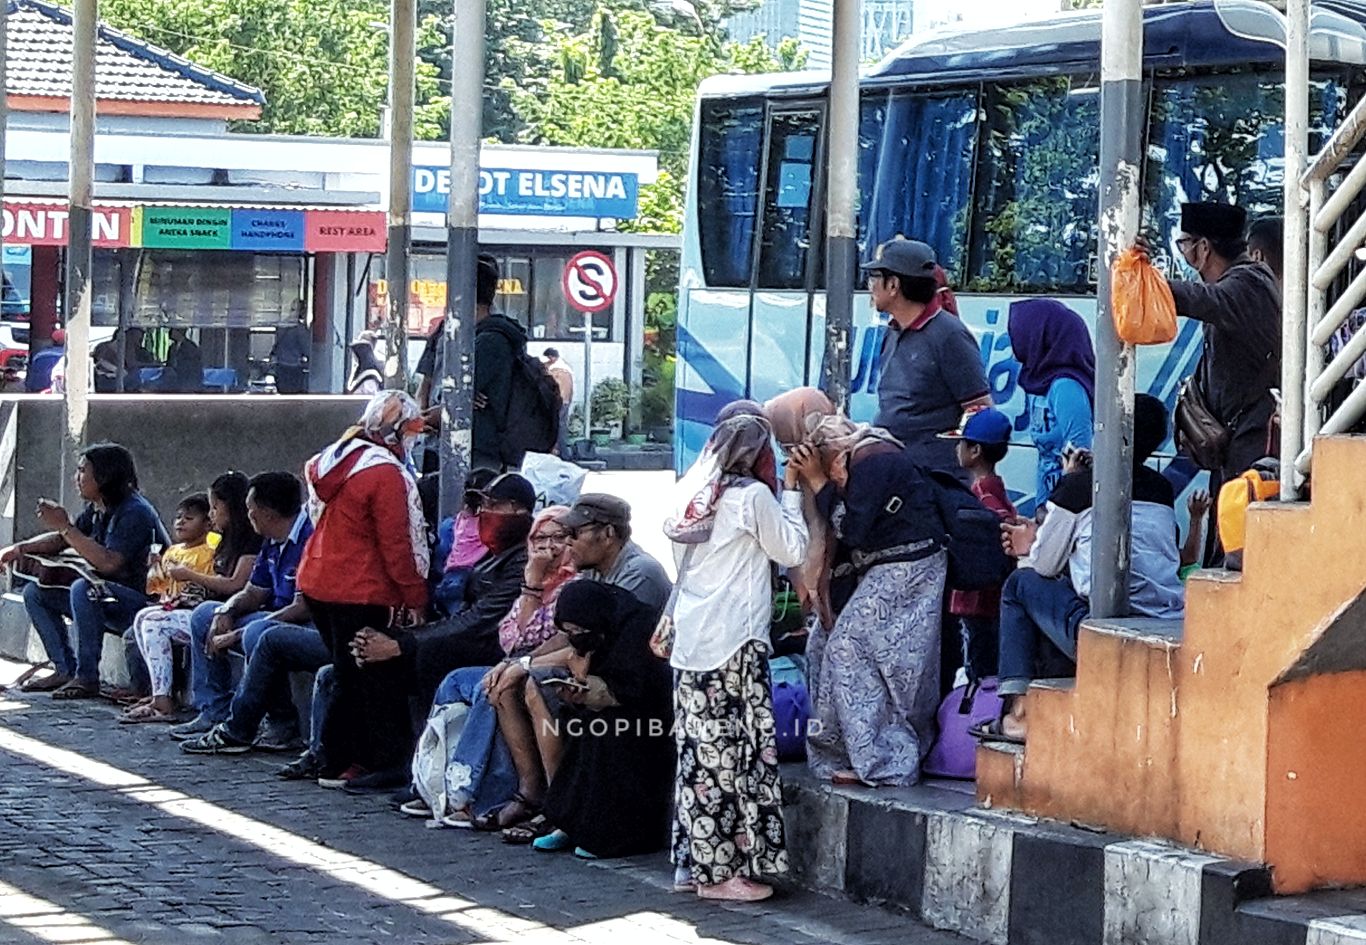 Beberapa orang sedang menunggu kedatangan bus di Terminal Purabaya, Surabaya. (foto: Haris/ngopibareng.id)